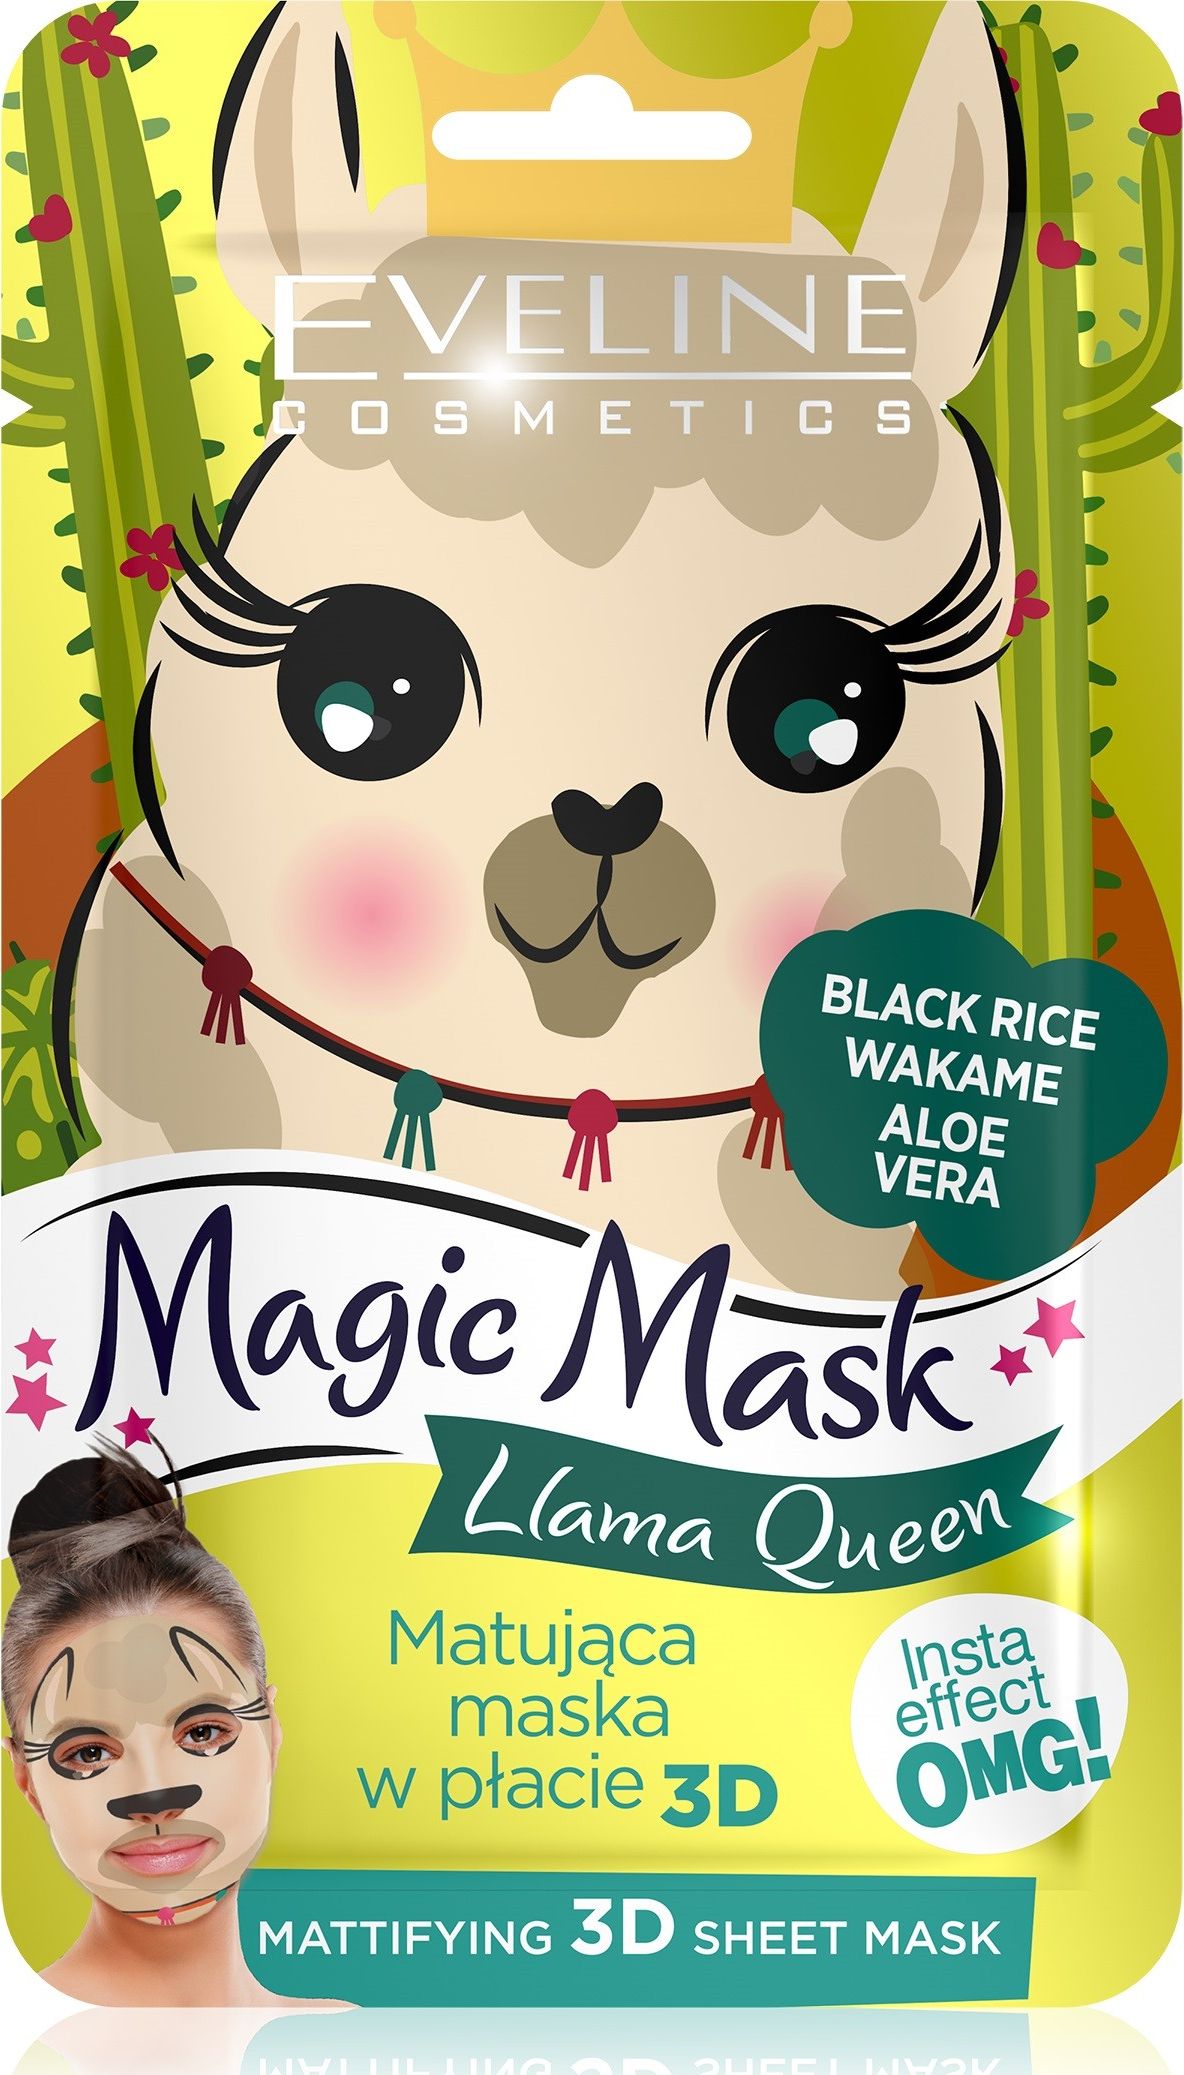 Eveline Eveline Magic Mask Matujaca Maska w placie 3D Llama Queen 1szt 086303 (5901761986303)